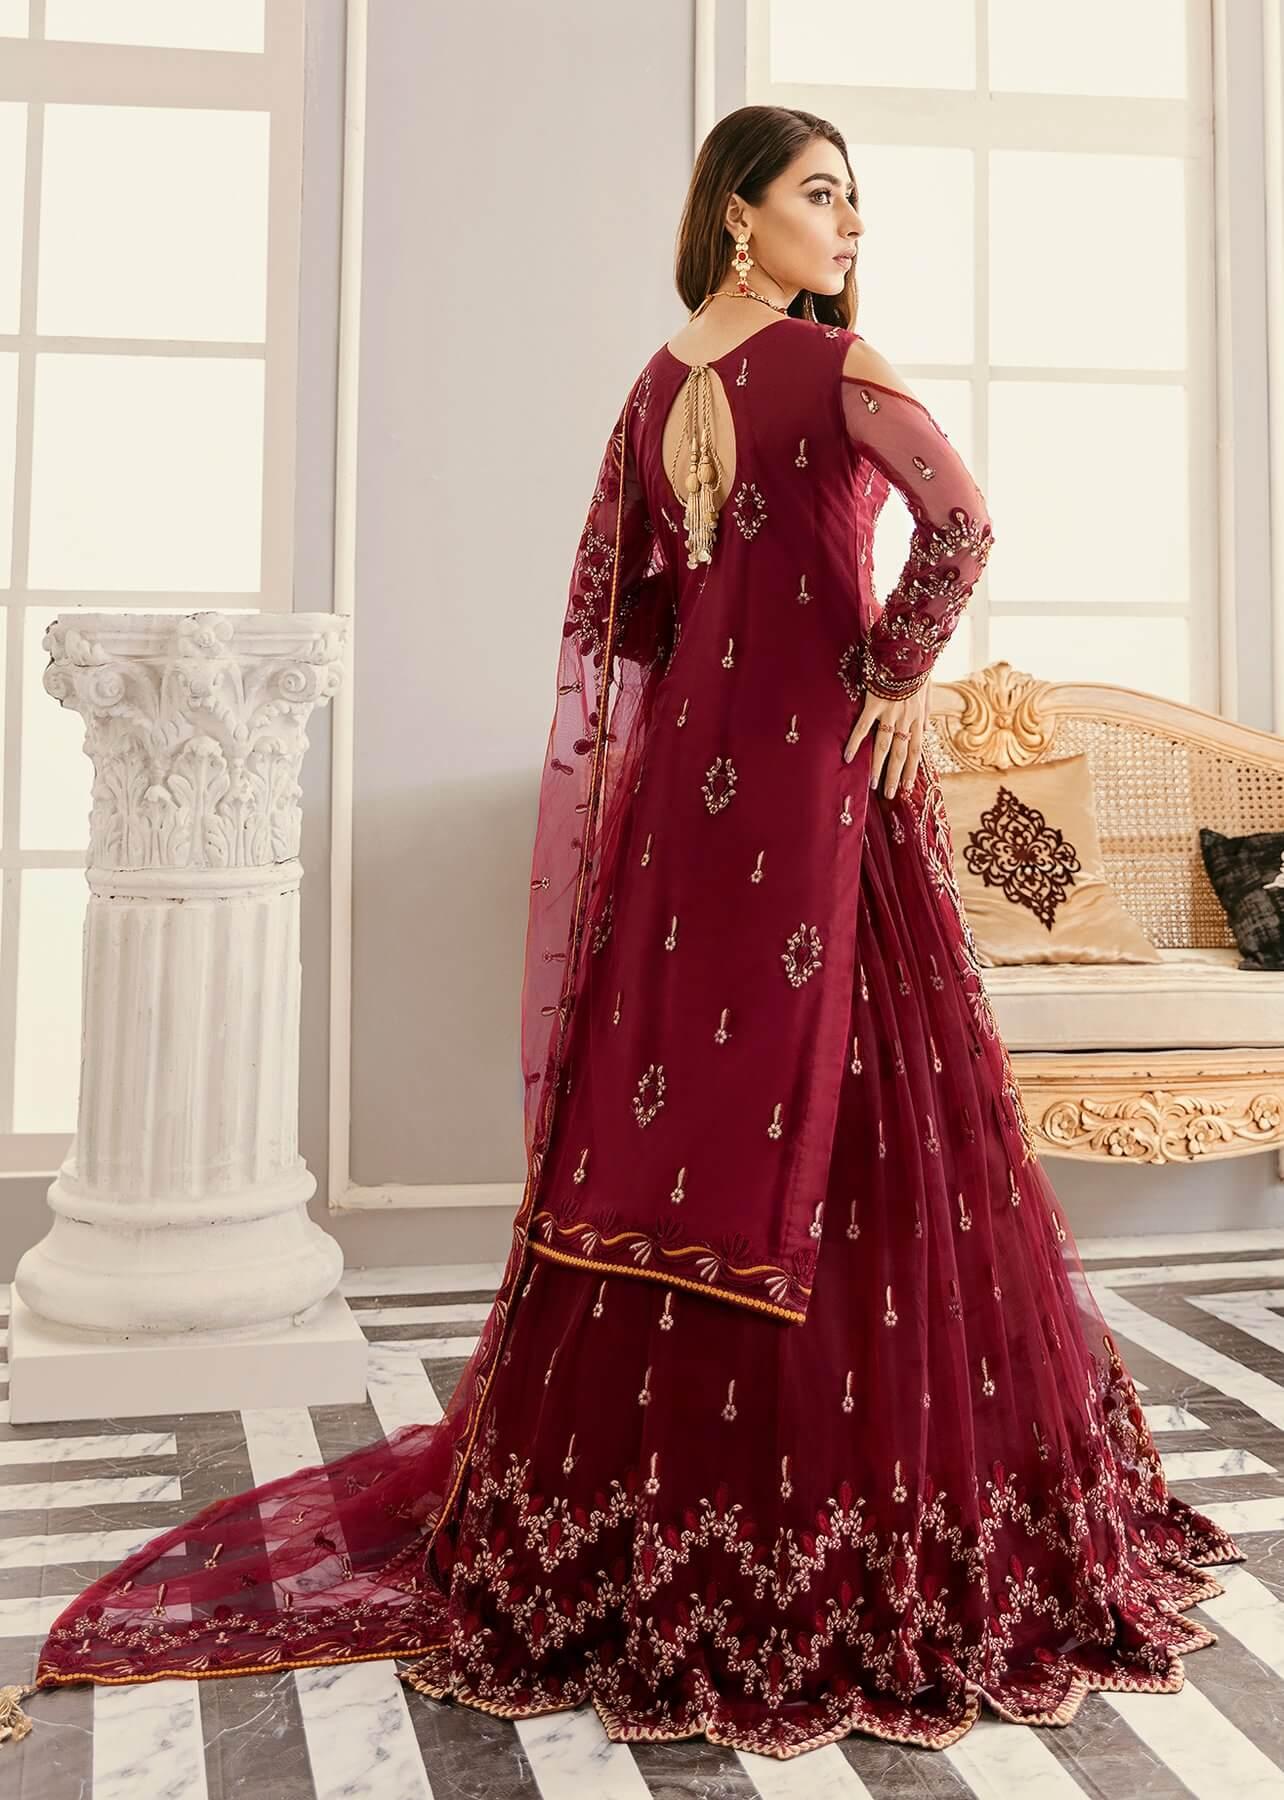 Akbar Aslam Libas e Khas Wedding Collection 3pc Suit AAWC-1328 AMARYLLIS